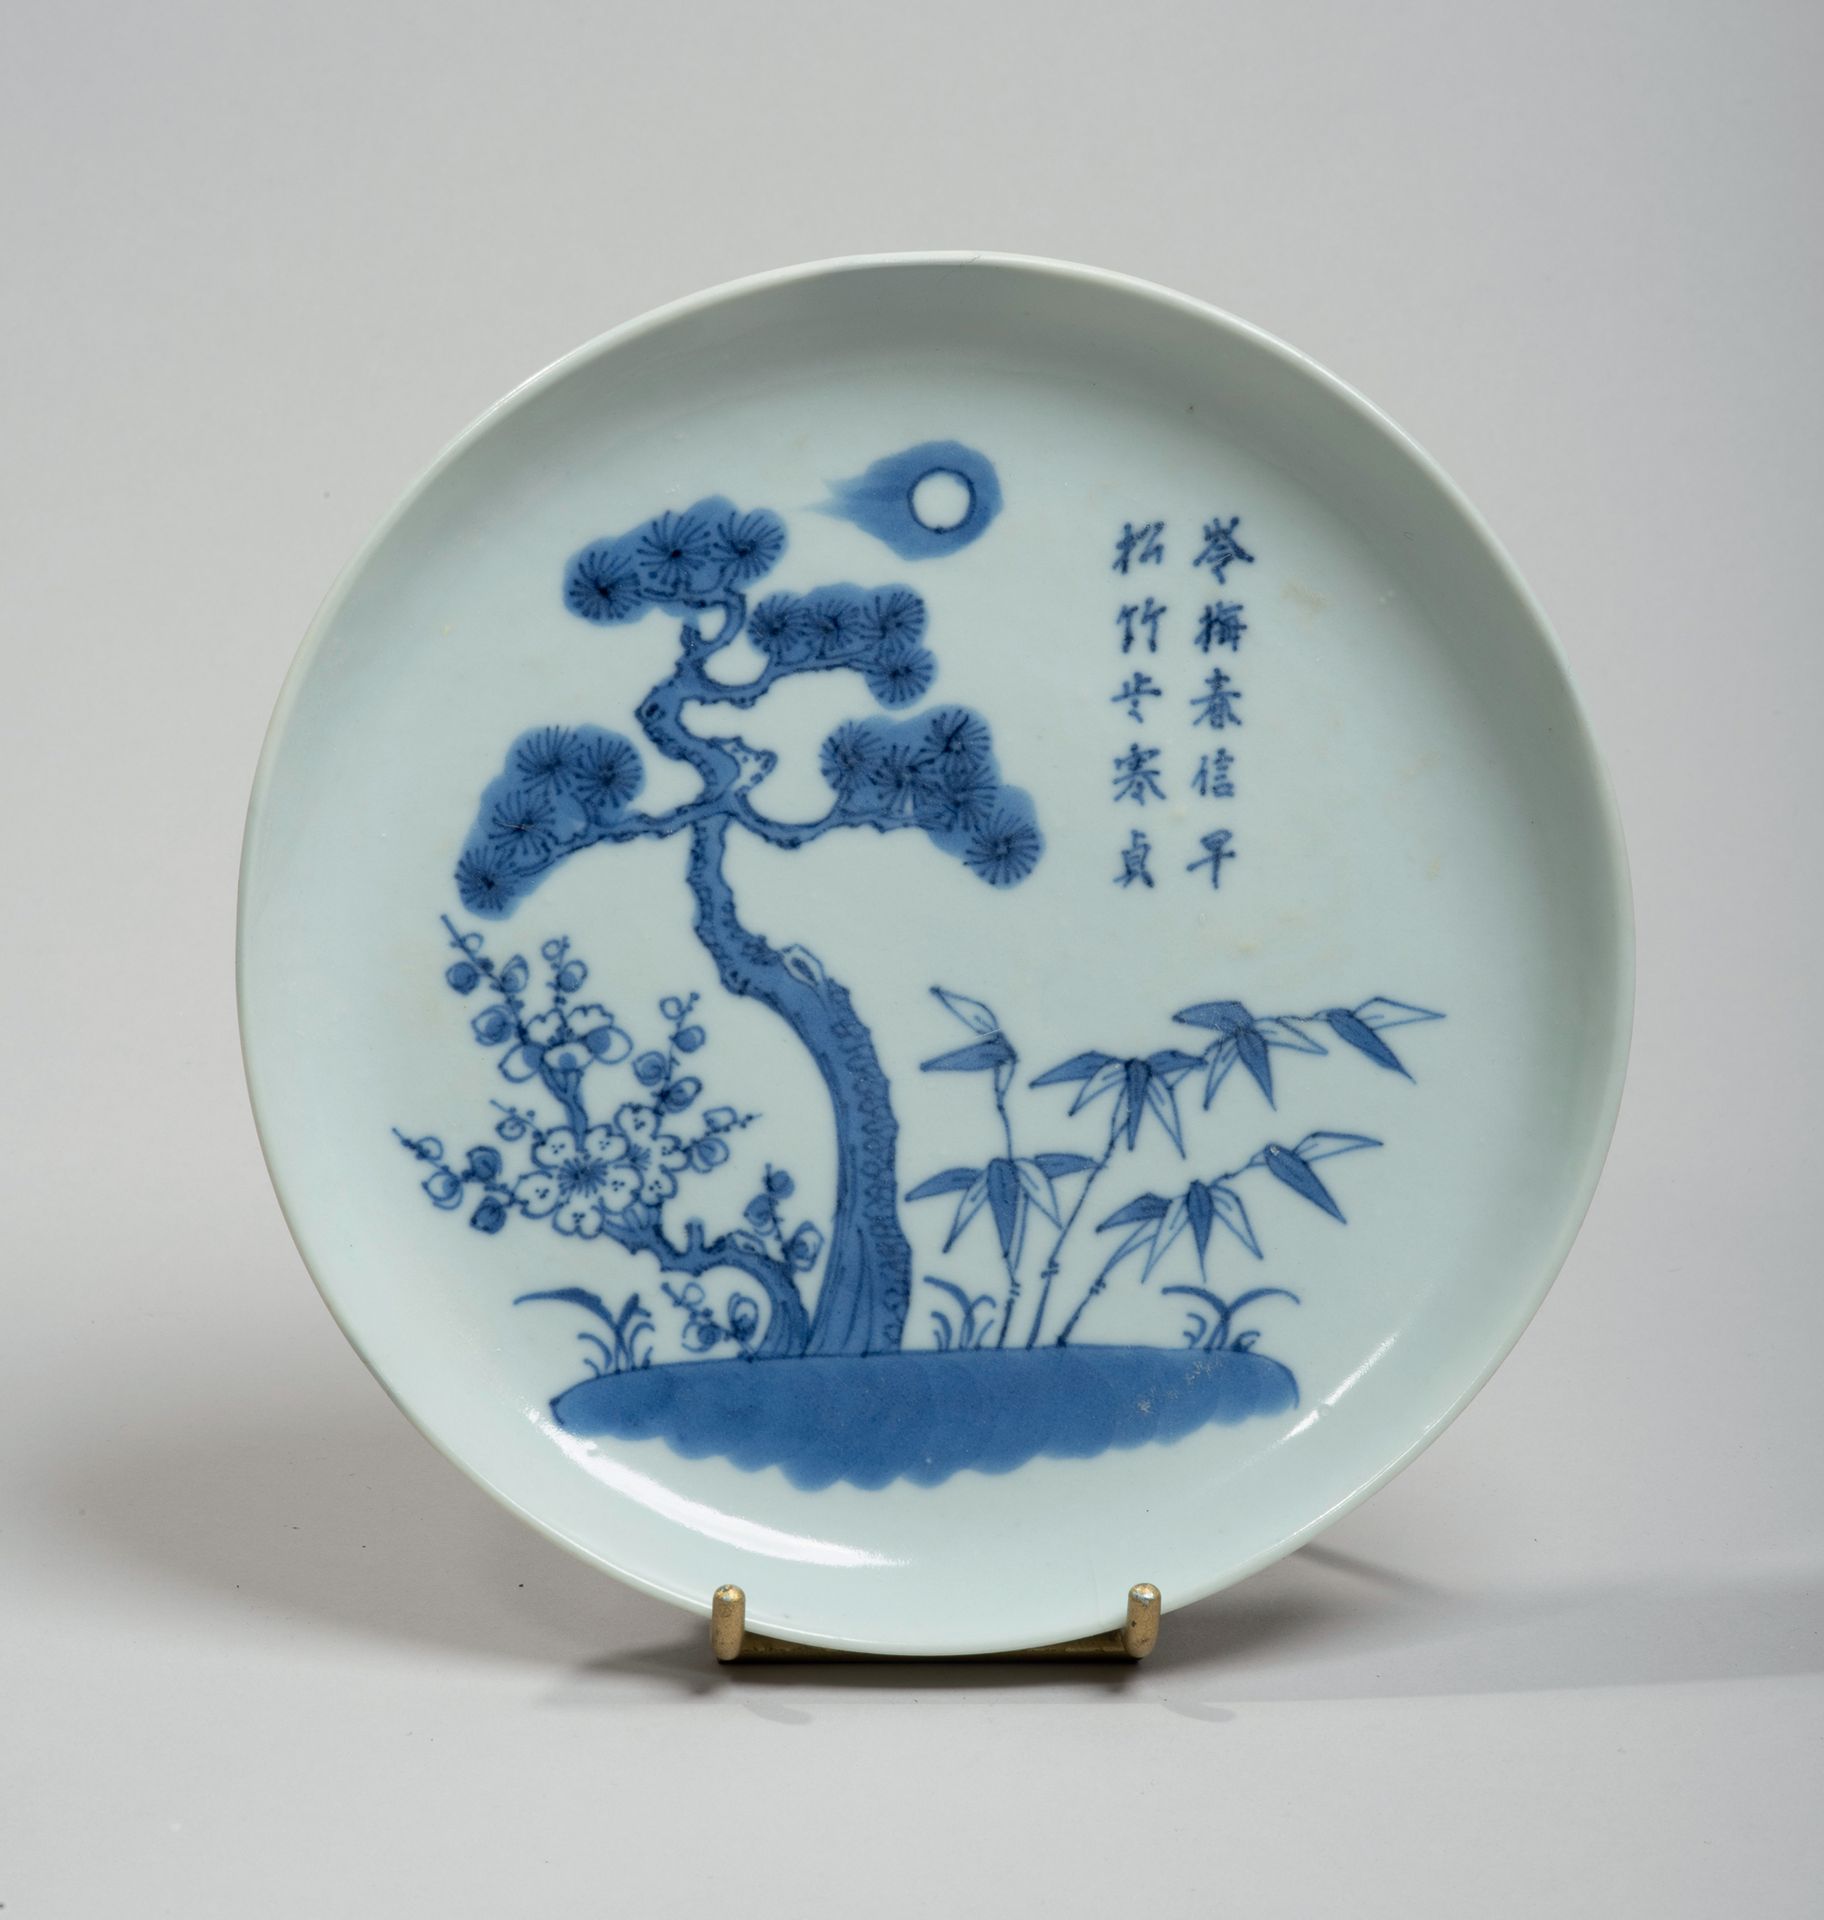 VIETNAM, Hue - XIXe siècle 
Porcelain bowl decorated in blue underglaze with the&hellip;